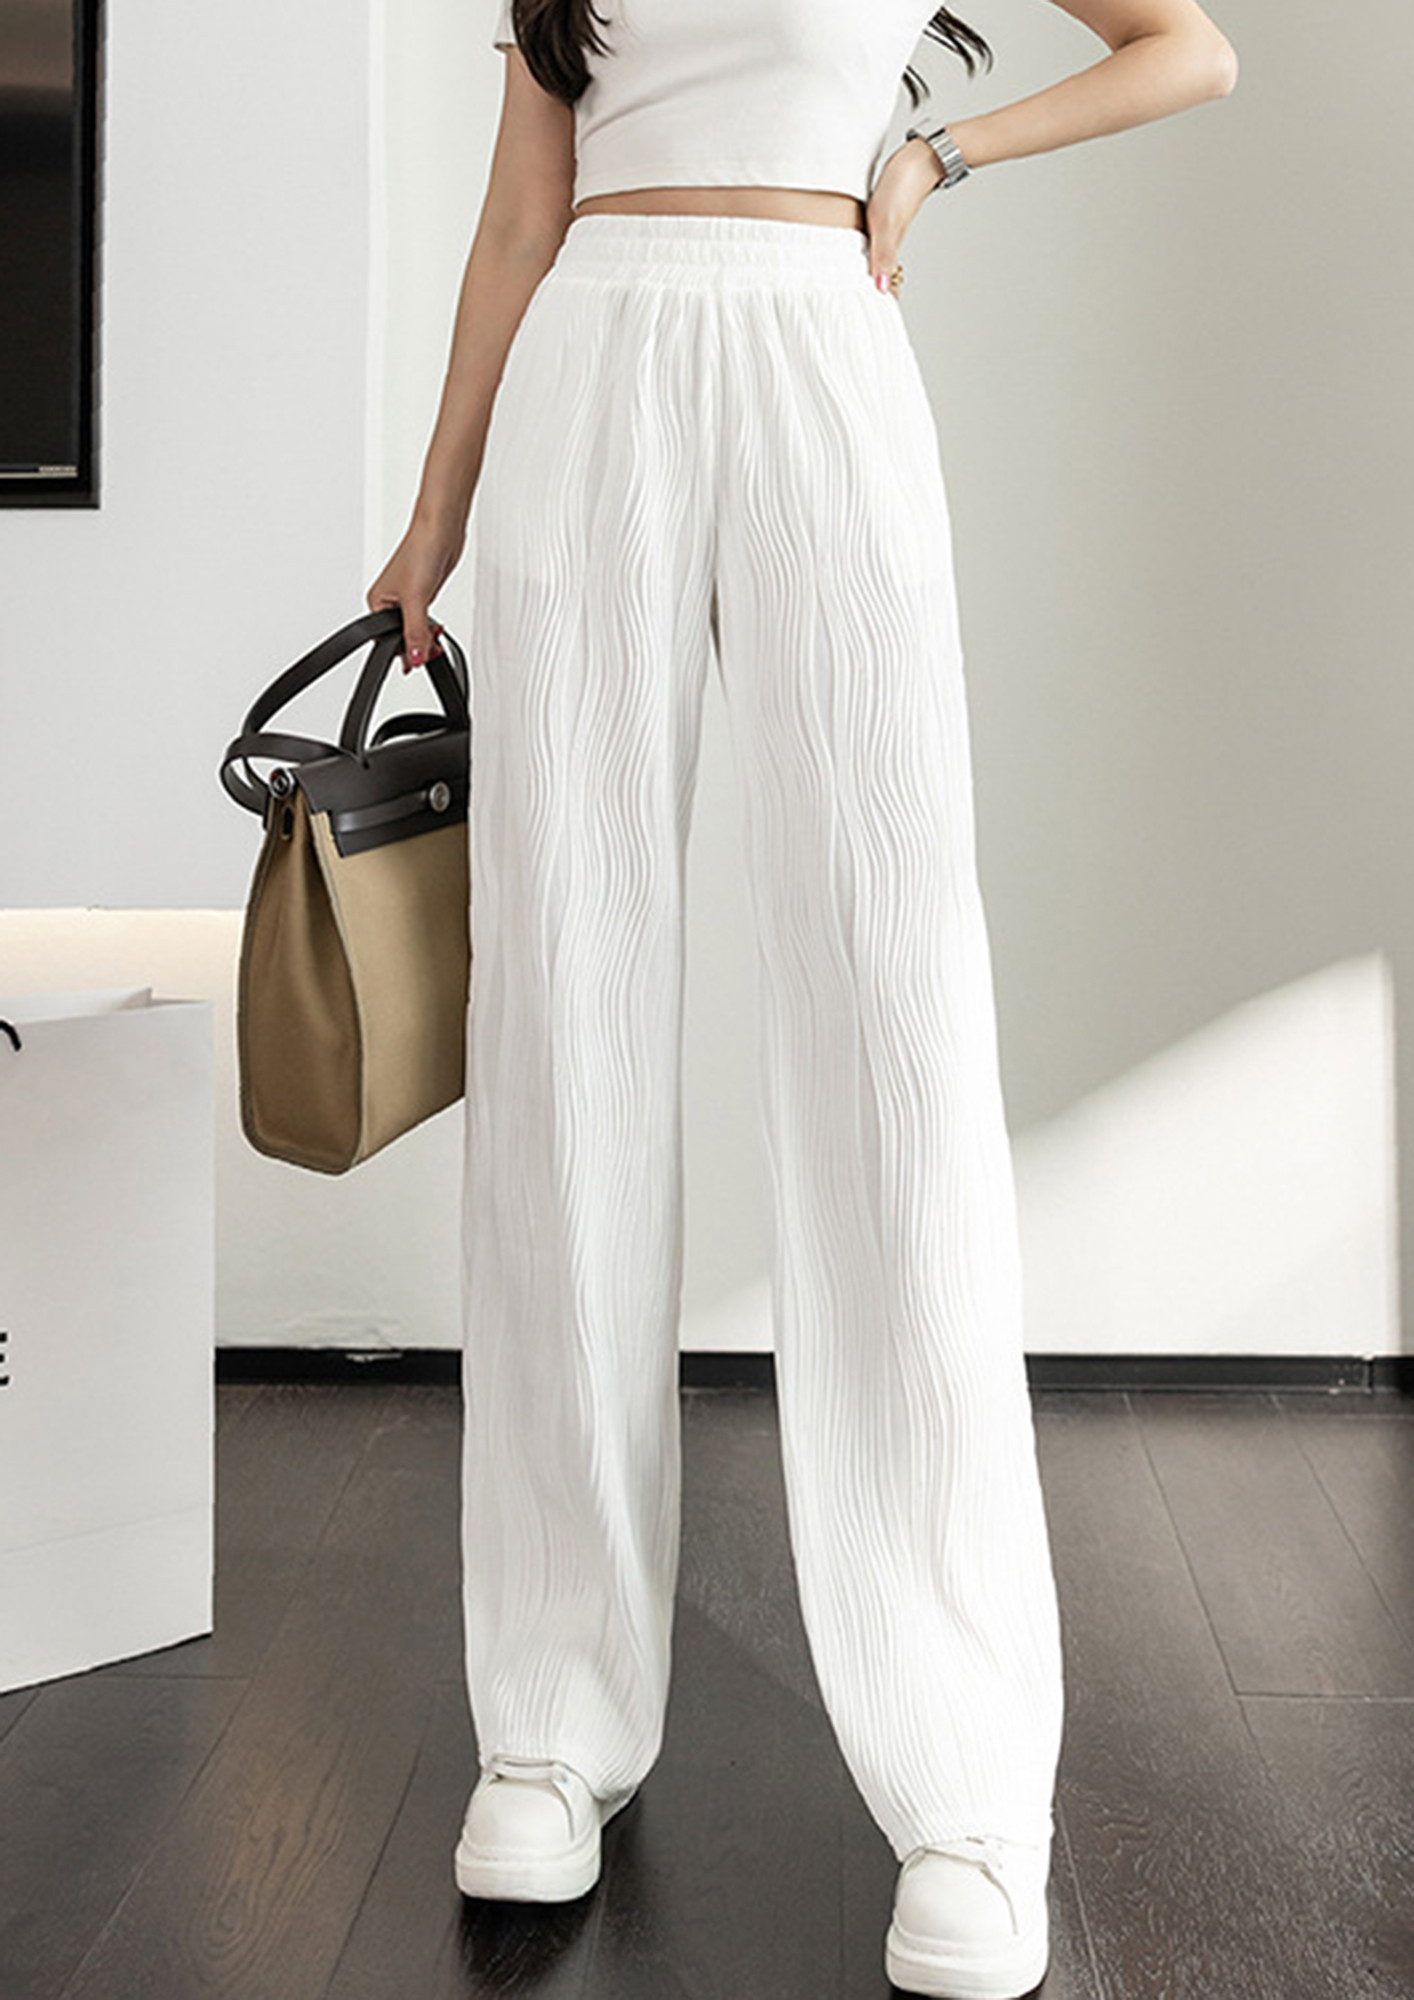 Oasis Womens Black White Trousers Striped Wide Leg Trousers | eBay-saigonsouth.com.vn